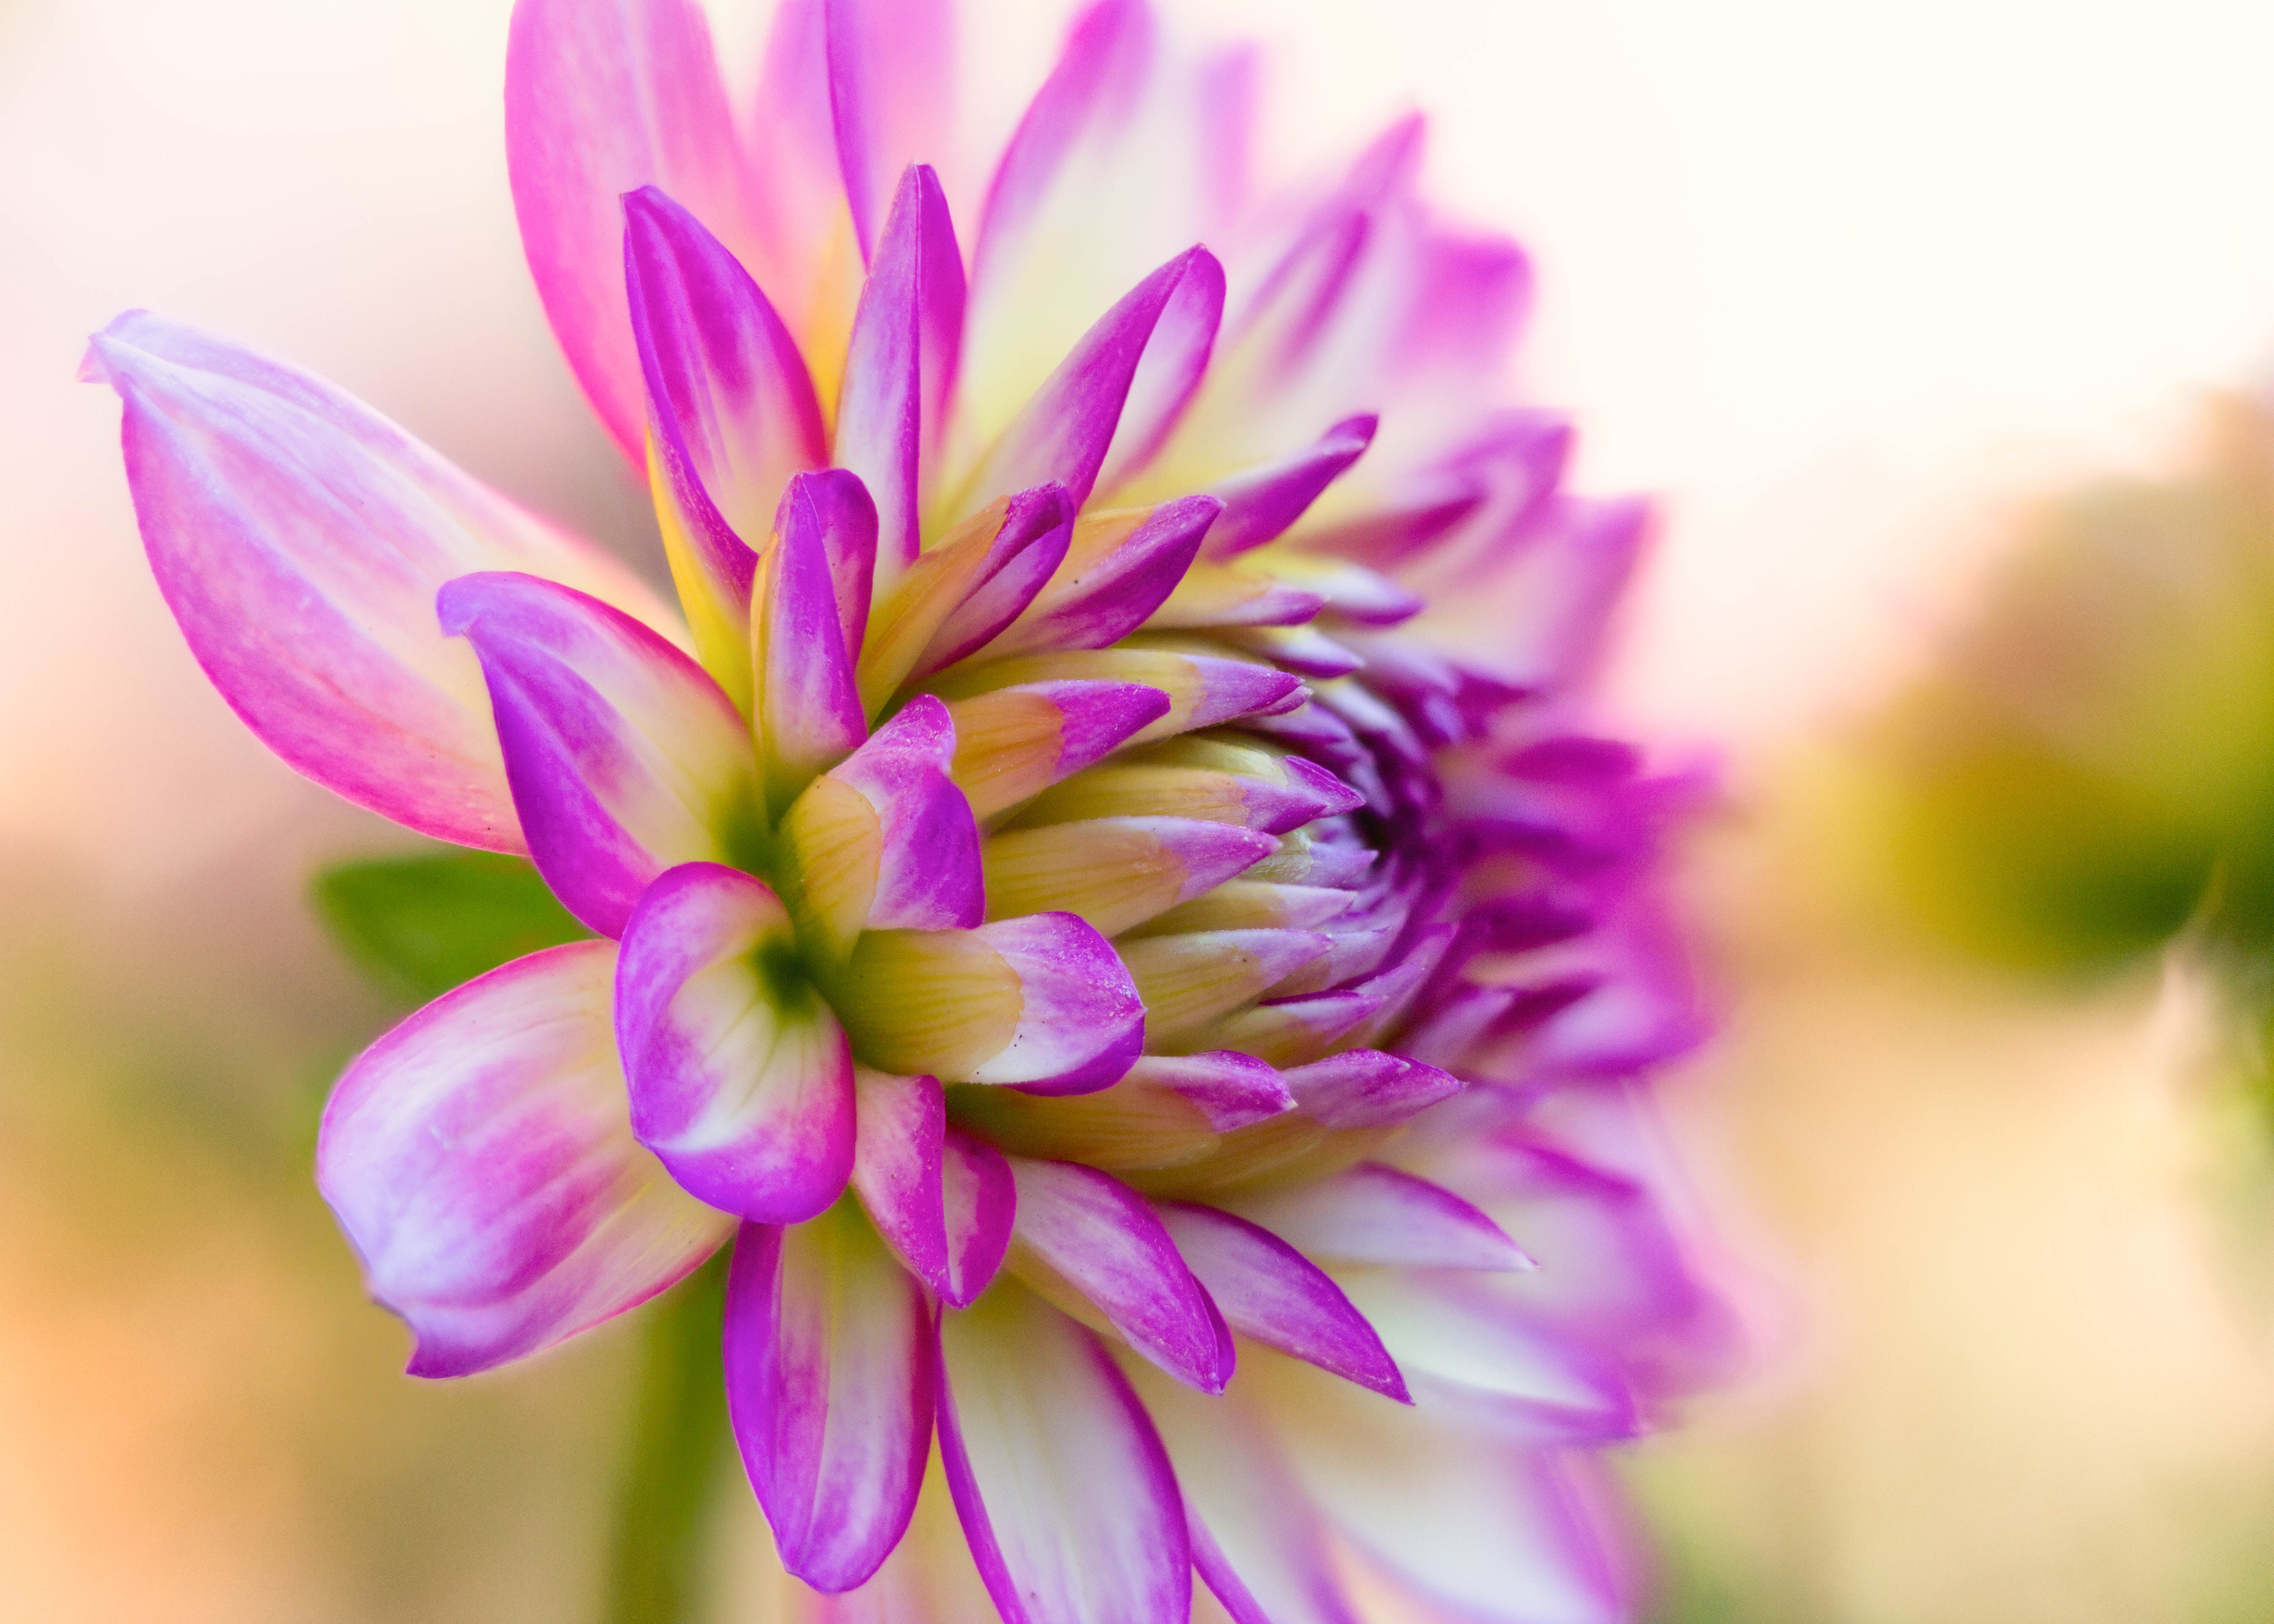 micro photography of purple and white flower, dahlia, dahlia